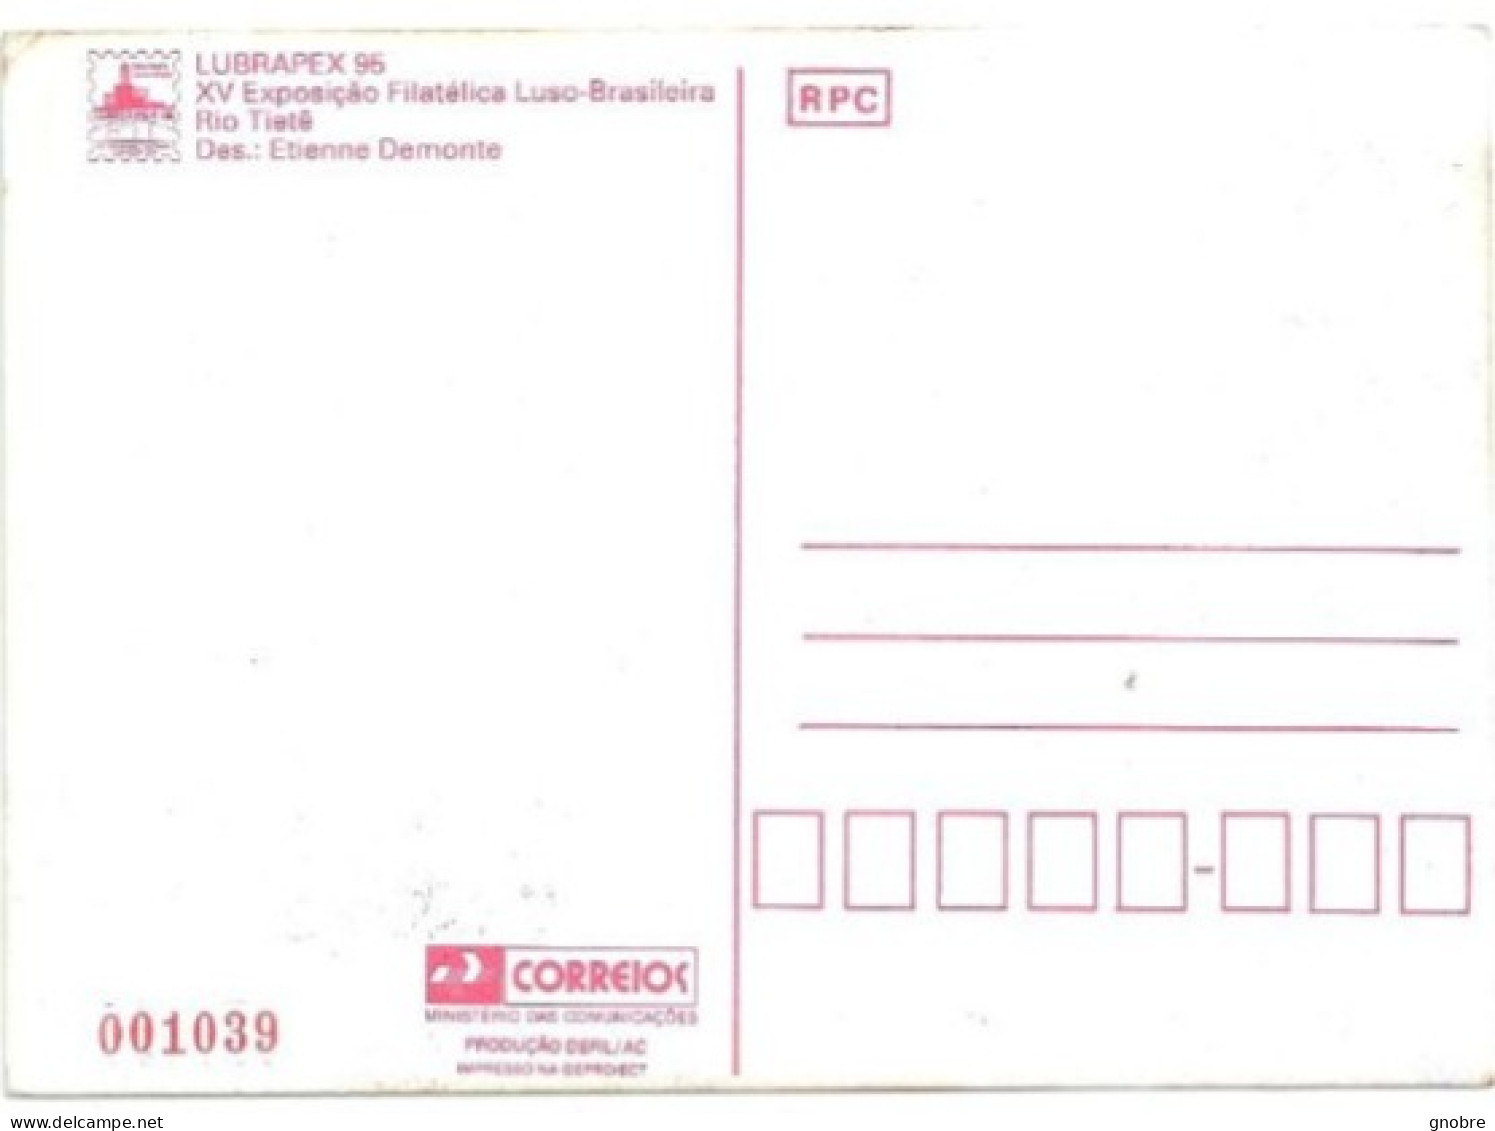 BRAZIL 1995 OFFICIAL MAXIMUM CARD MAX-203 LUBRAPEX 95 PORTUGAL RIO TIETE RIVER - Cartes-maximum